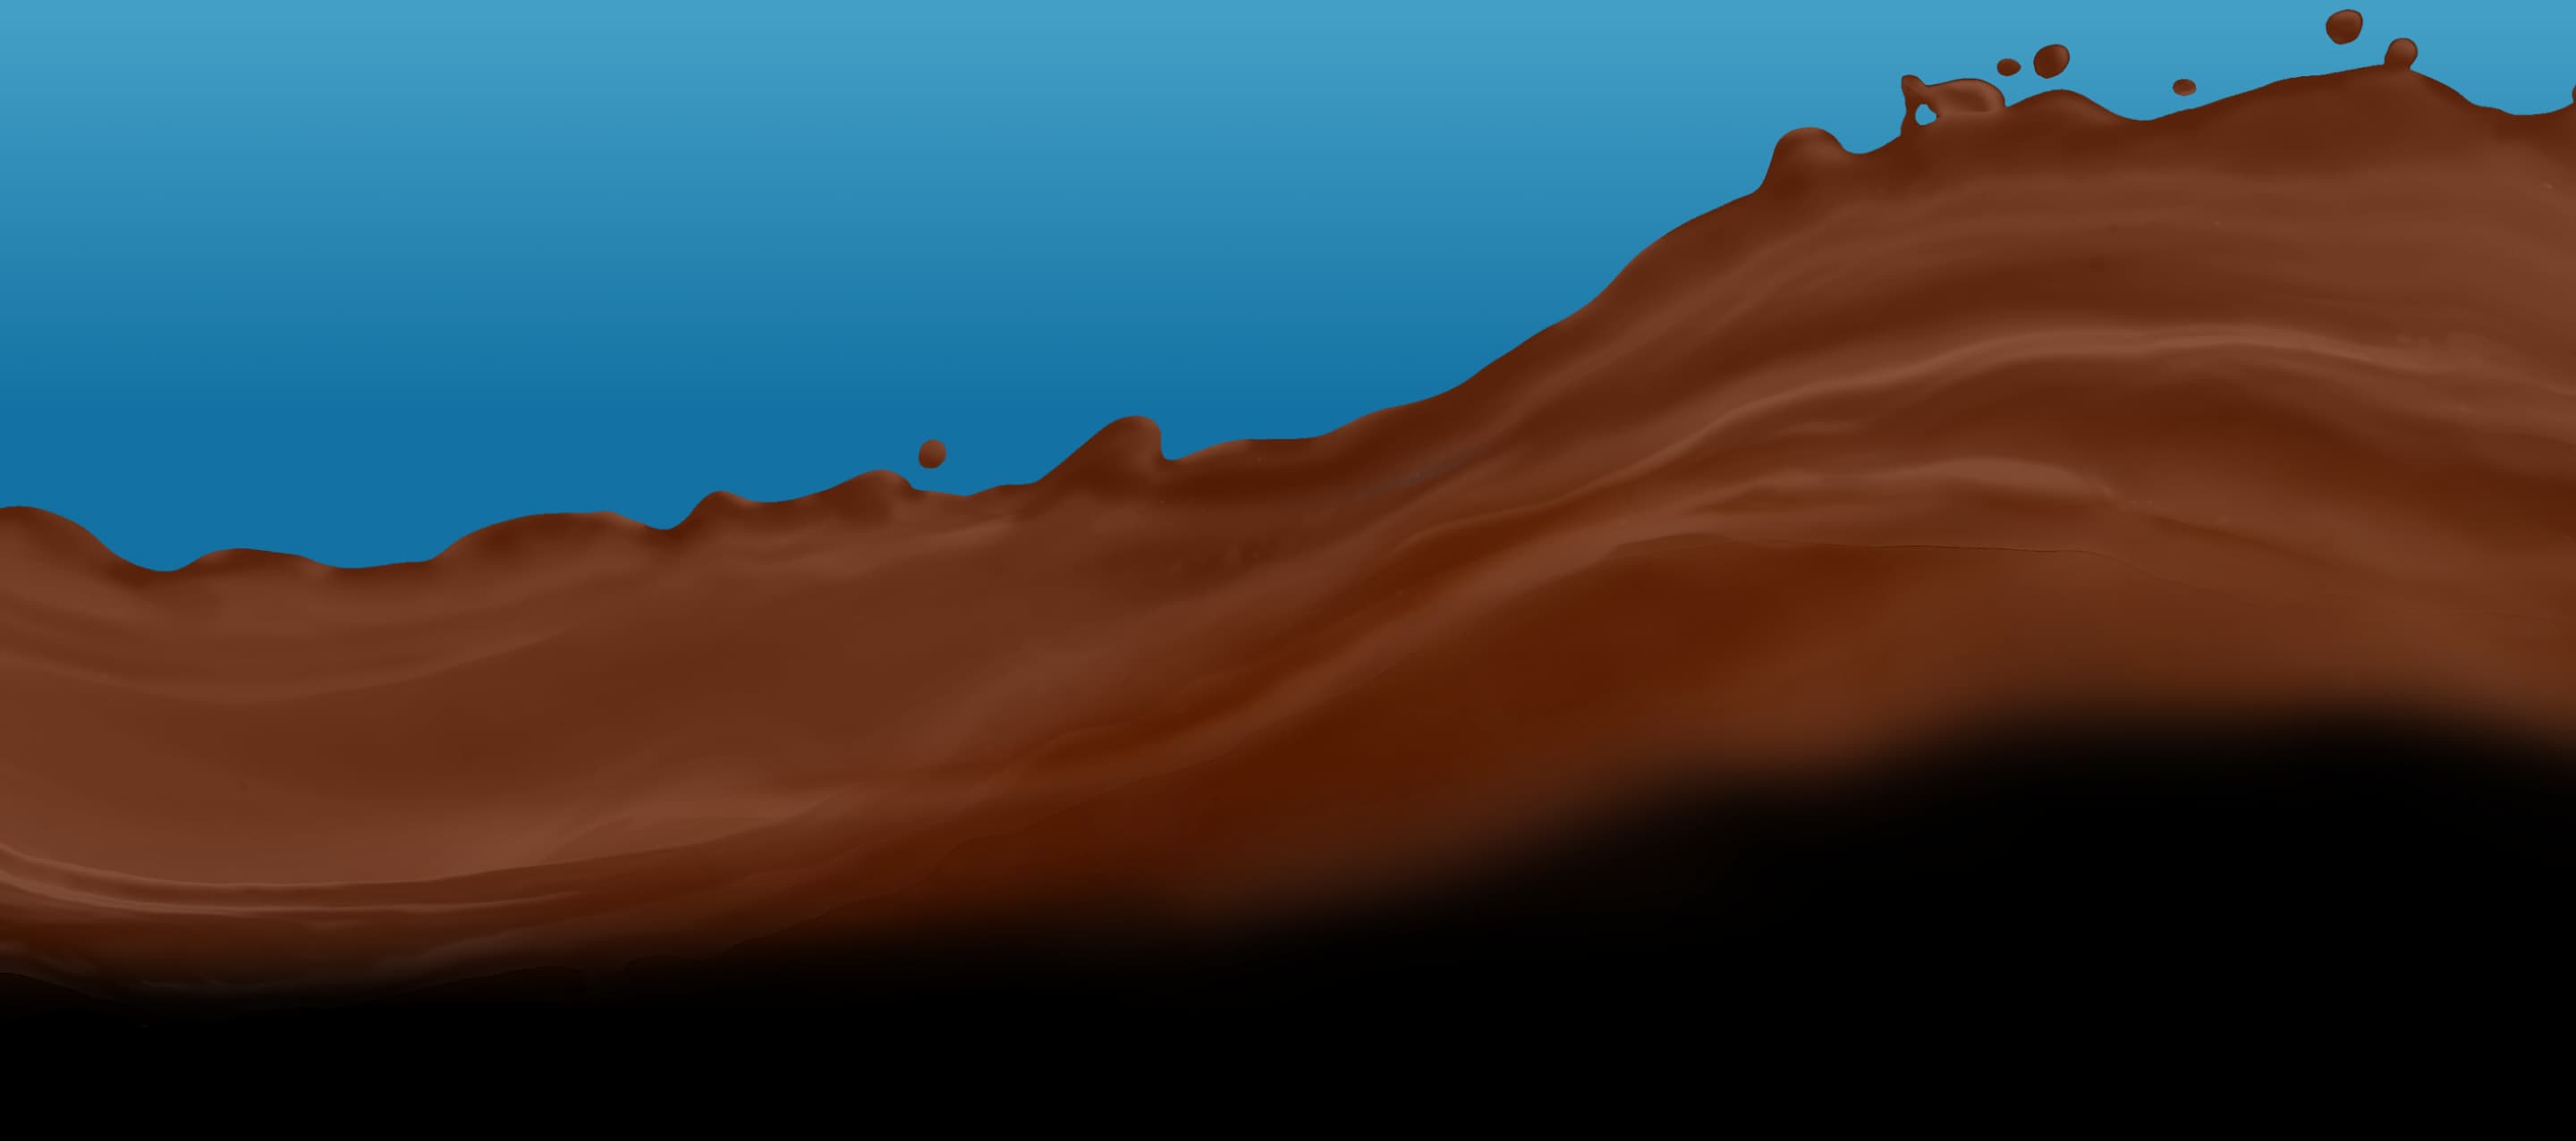 Wave of Chocolate Almondmilk splashing